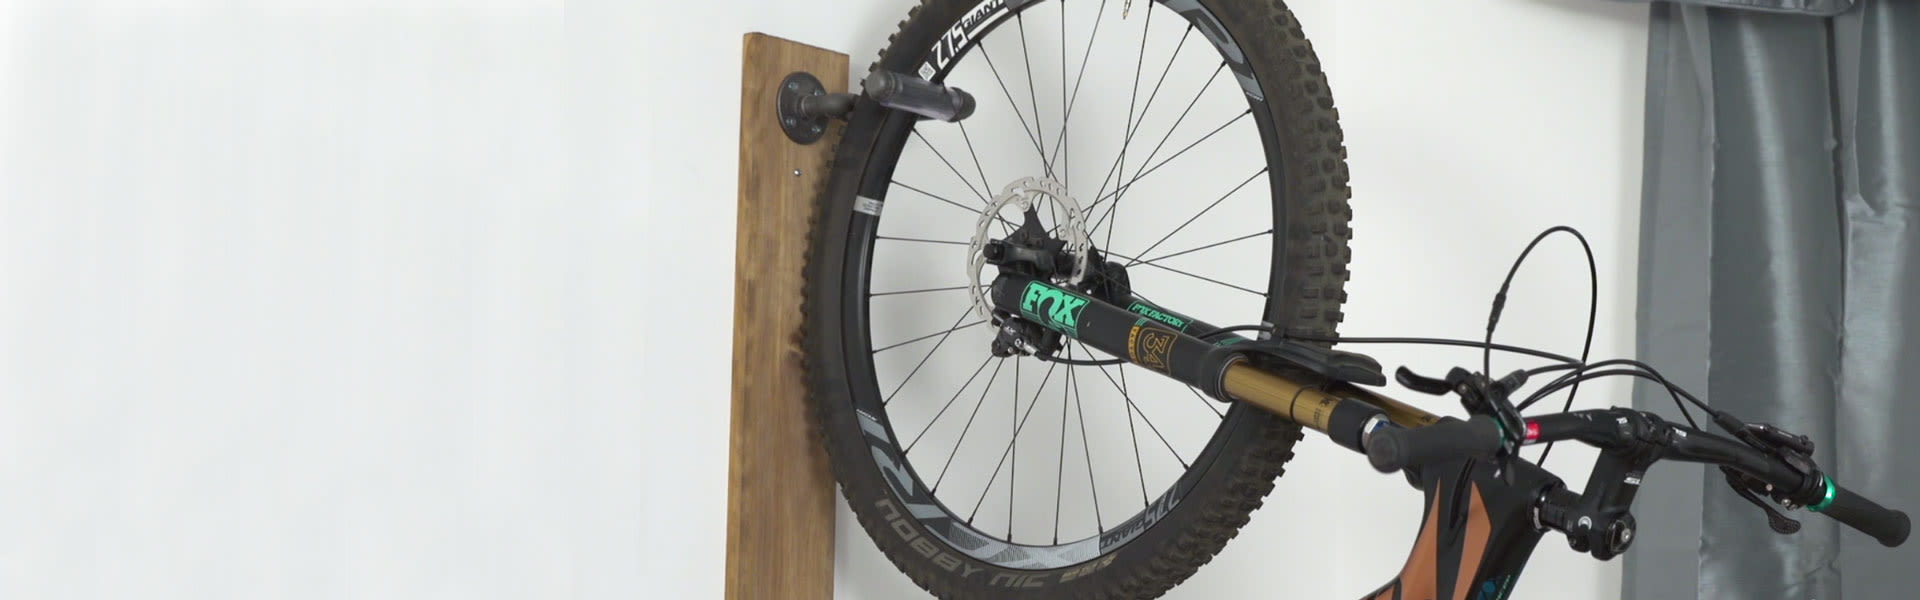 Installing Bike Hooks for Vertical Storage 